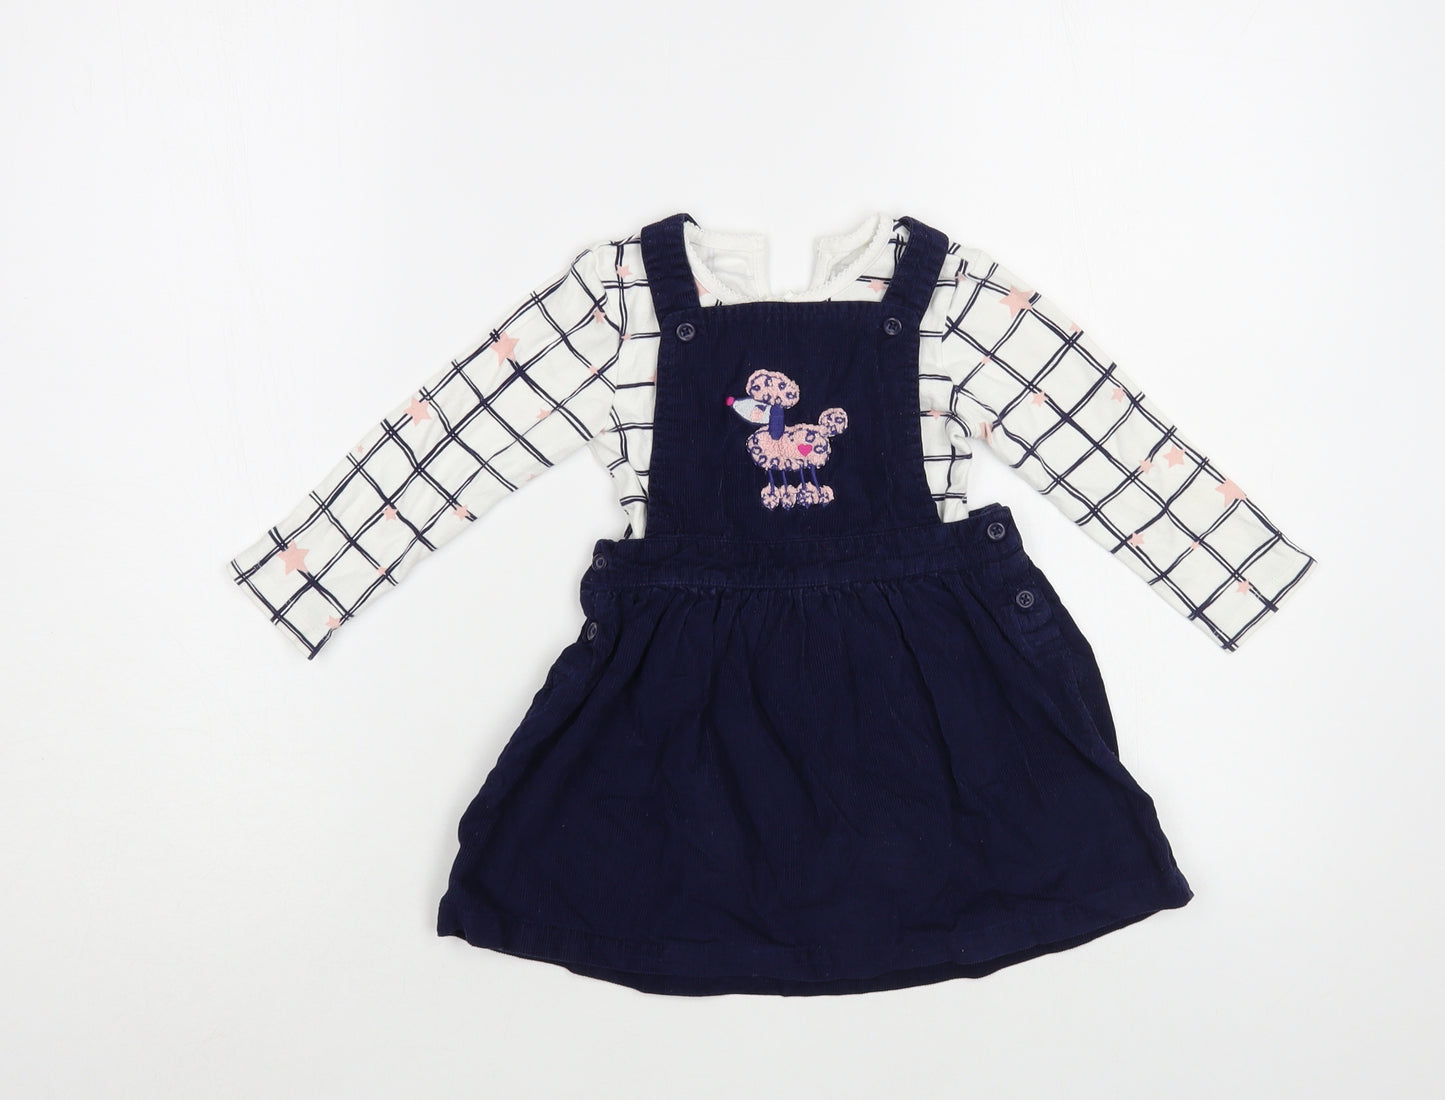 George  Blue Check Cotton Skirt/ Skort Set Outfit/Set Size 12-18 Months  Button - Poodle